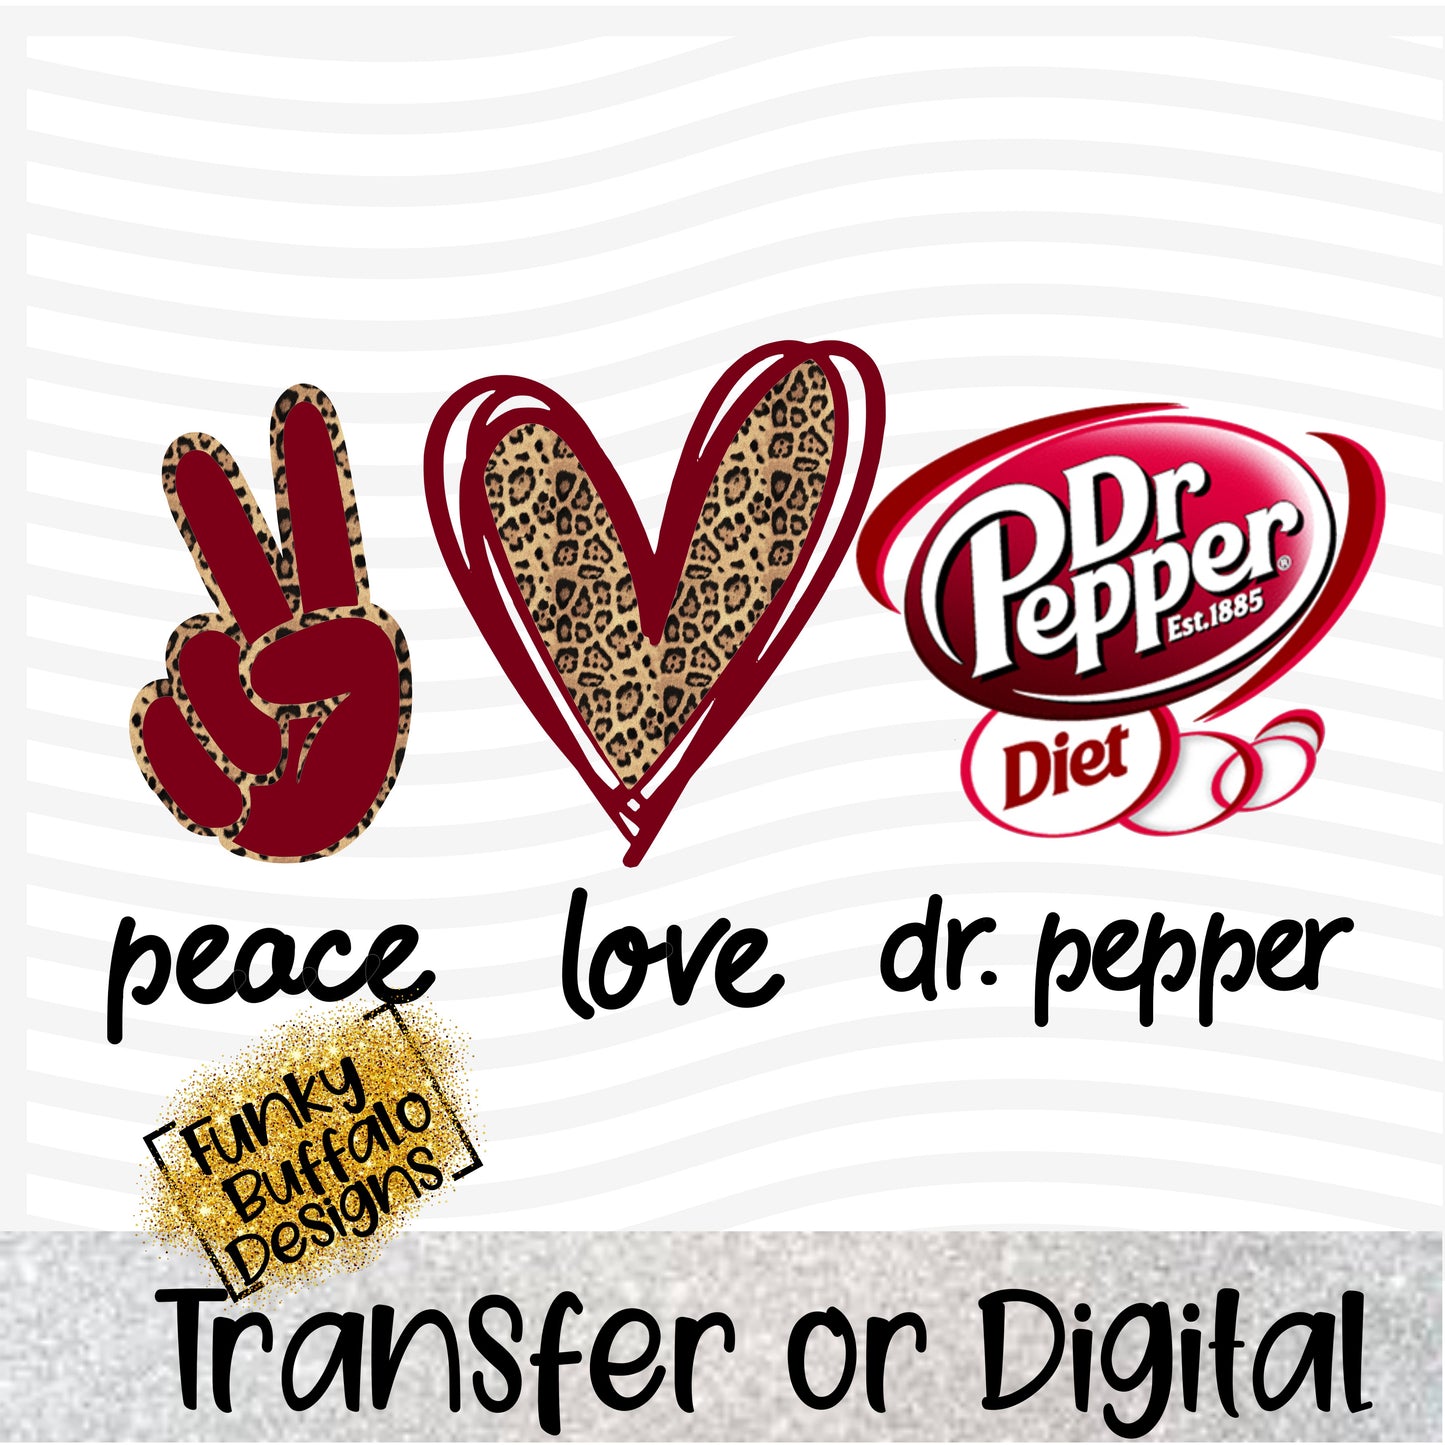 Peace Love Diet Dr Pepper